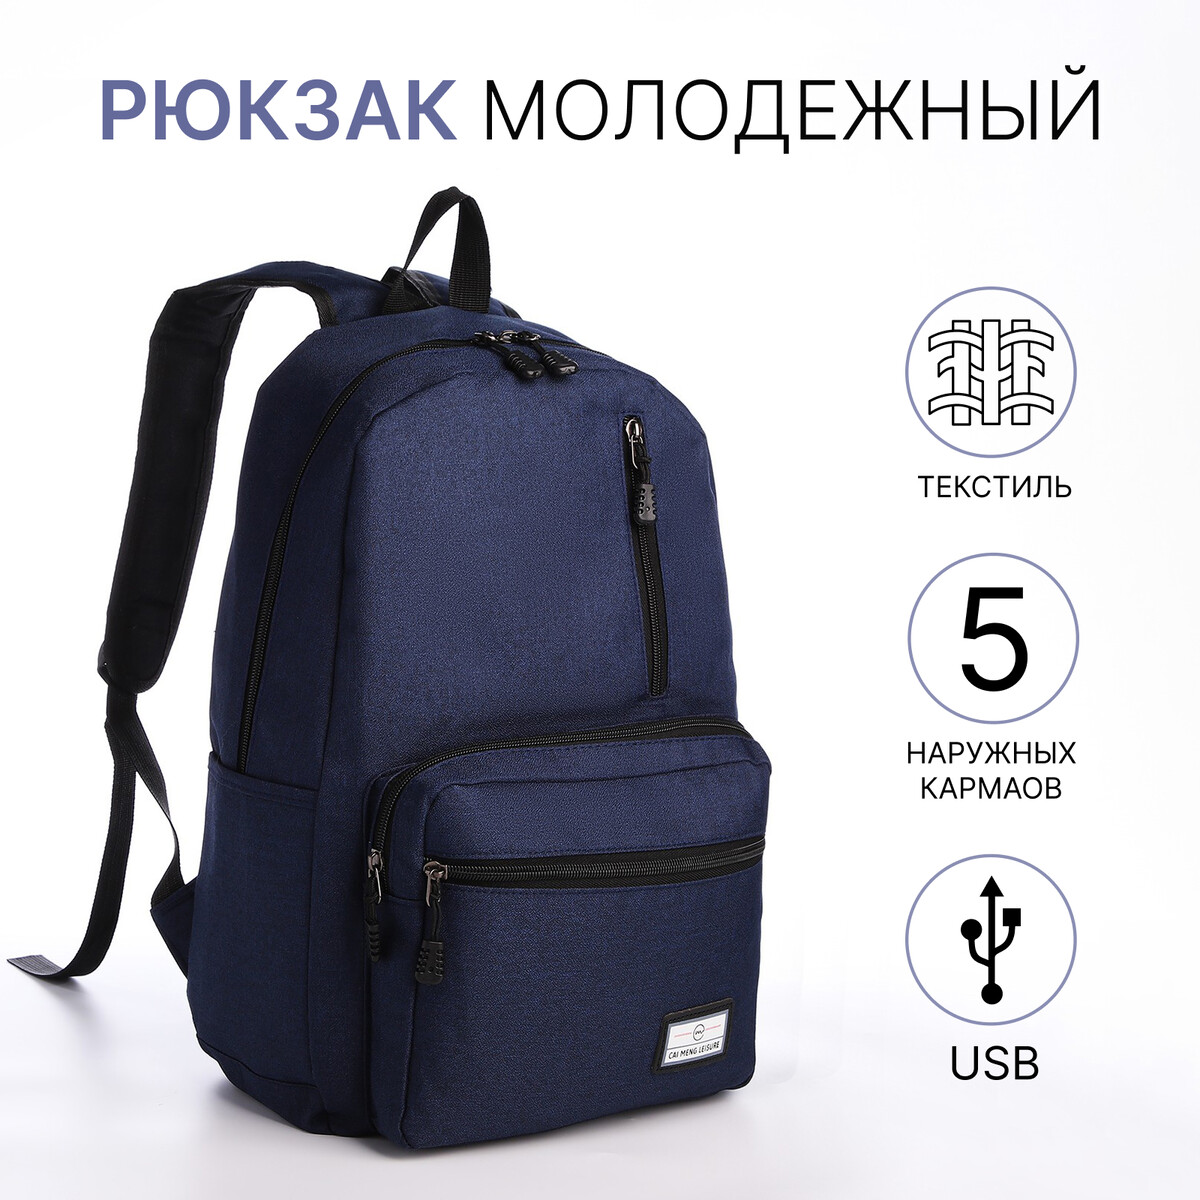 Рюкзак молодежный из текстиля на молнии, 5 карманов, usb, цвет синий